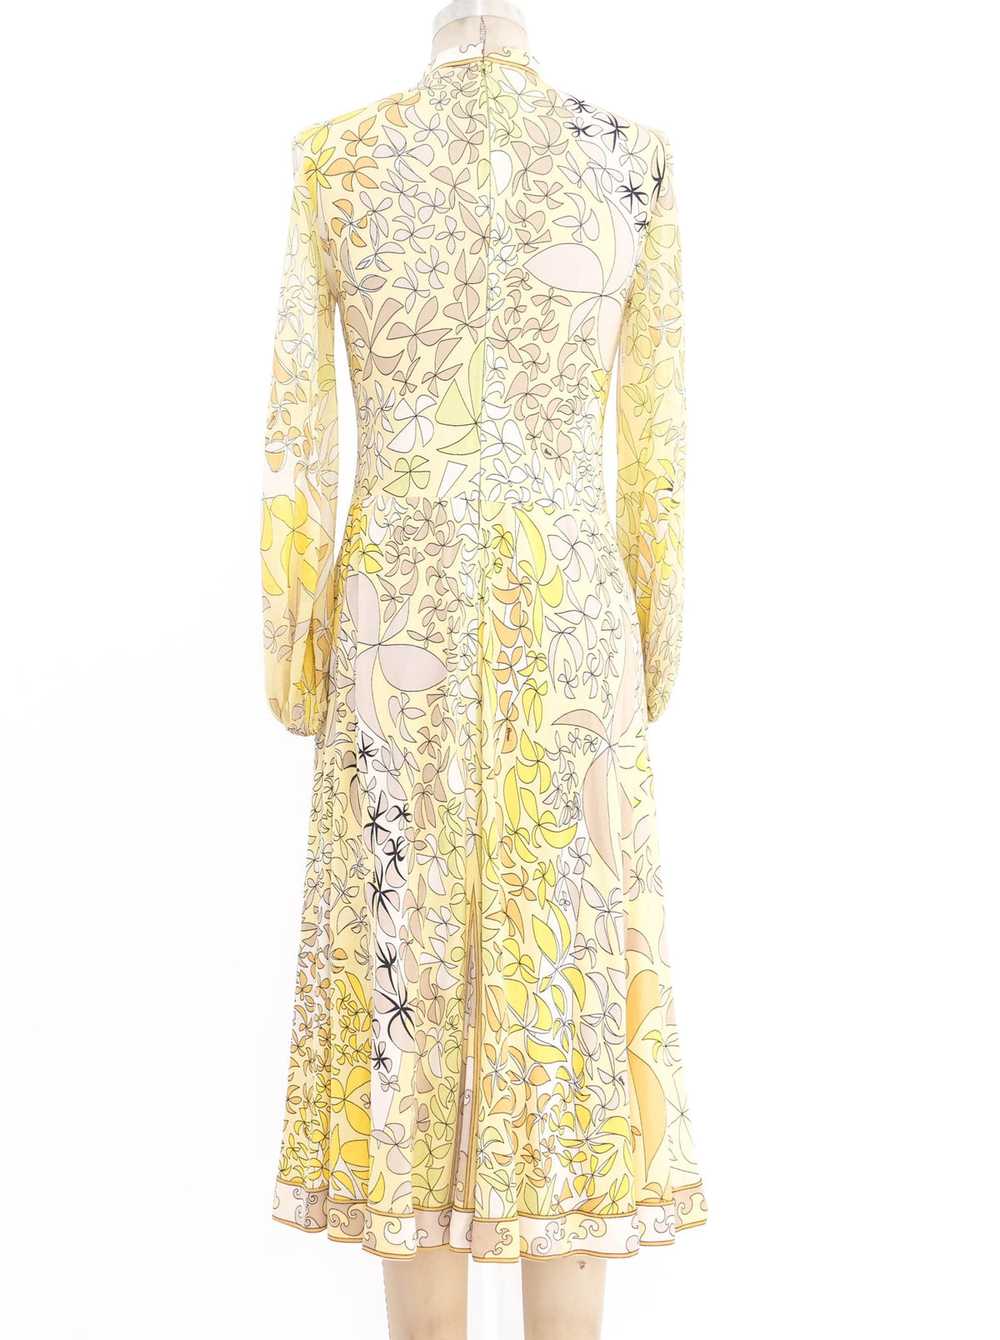 Bessi Printed Silk Jersey Dress - image 2